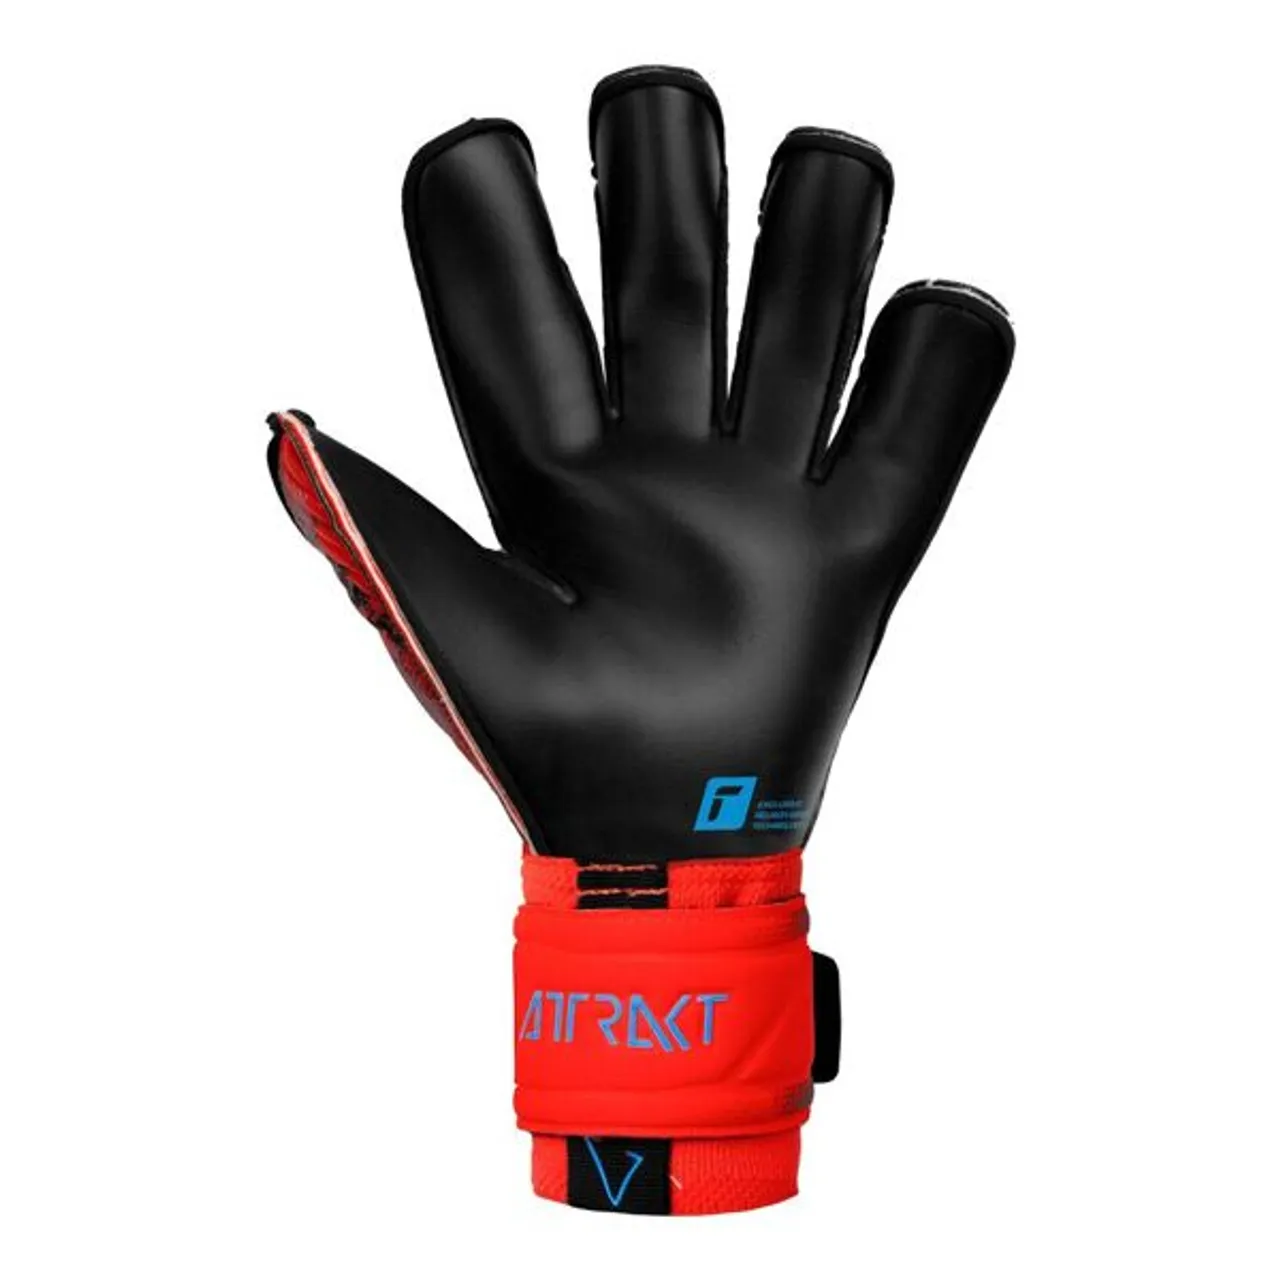 Torwarthandschuhe REUSCH "Attrakt Gold X Evolution Cut" Gr. 8,5, rot Damen Handschuhe Sporthandschuhe mit hervorragendem Grip